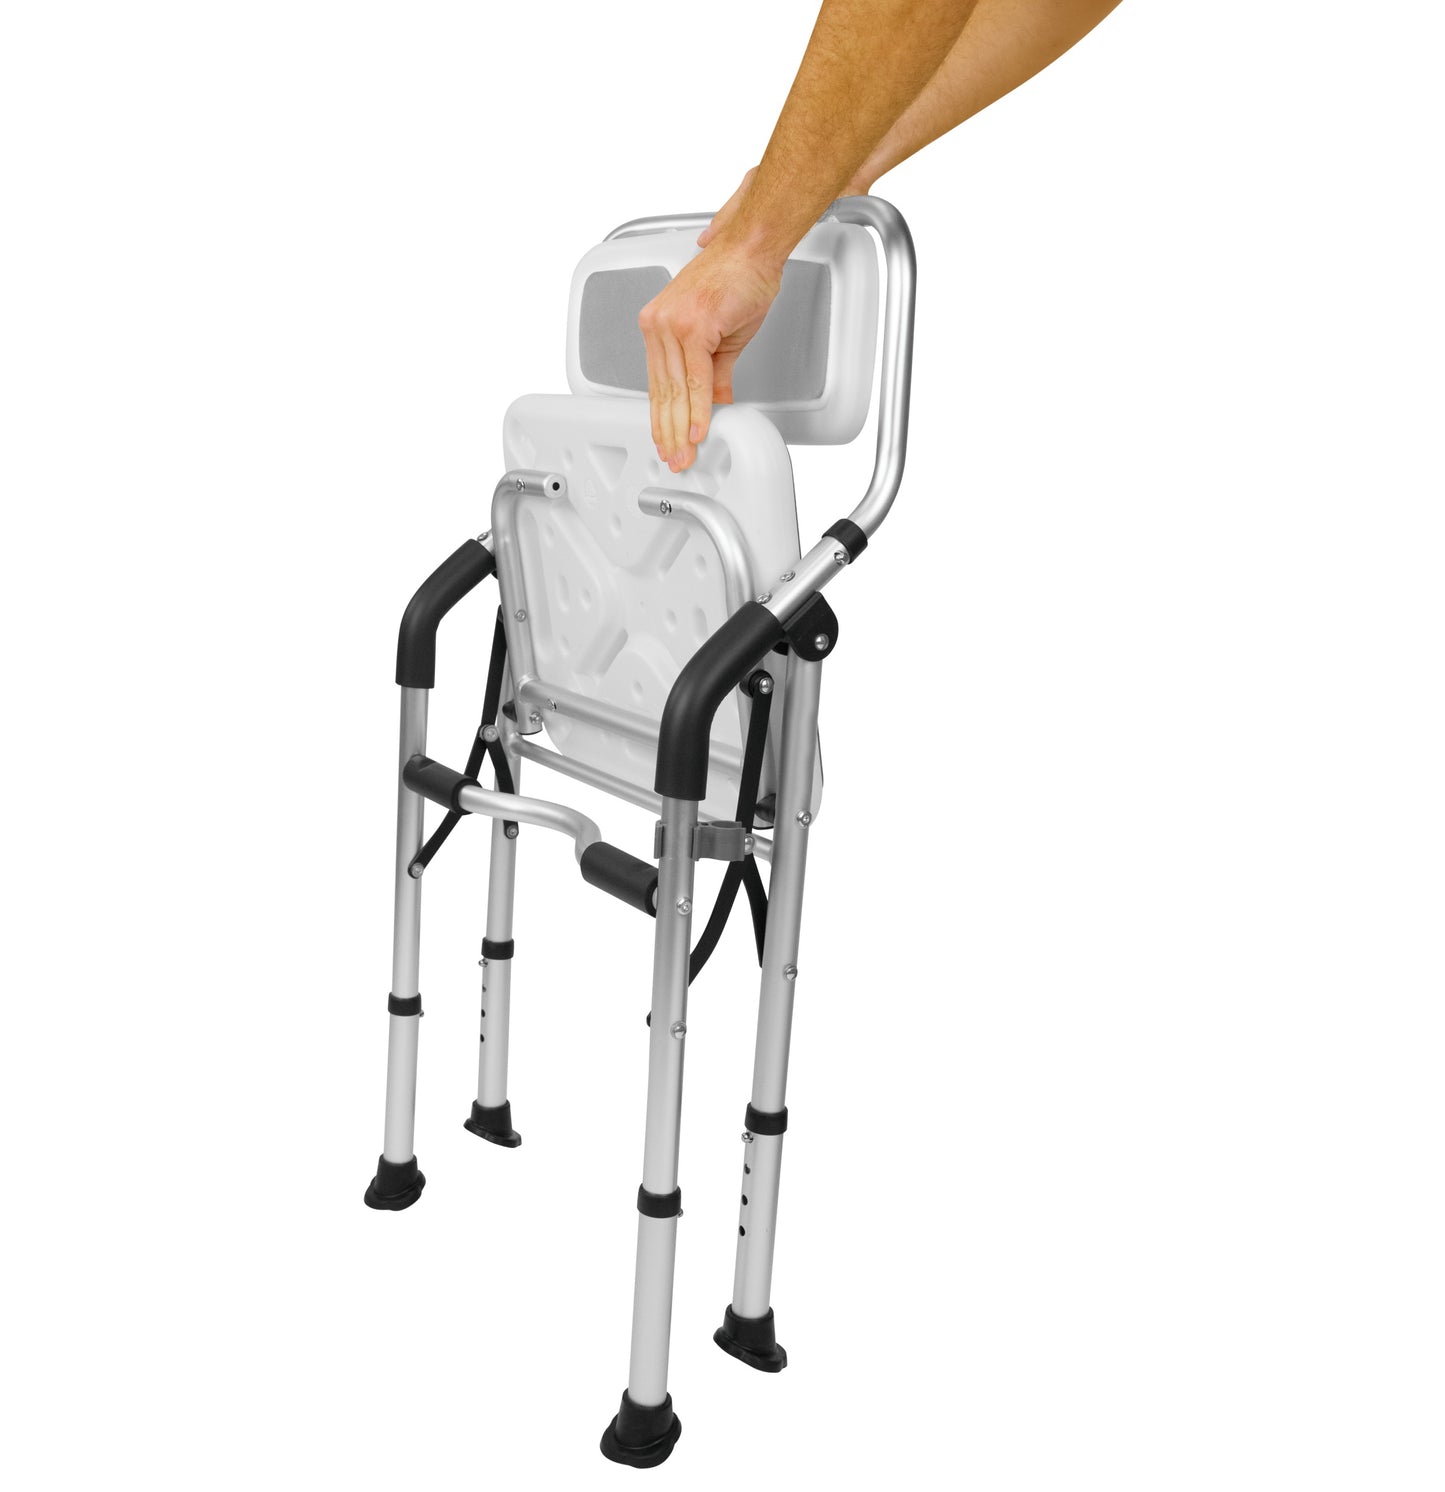 Vive Folding Shower Chair